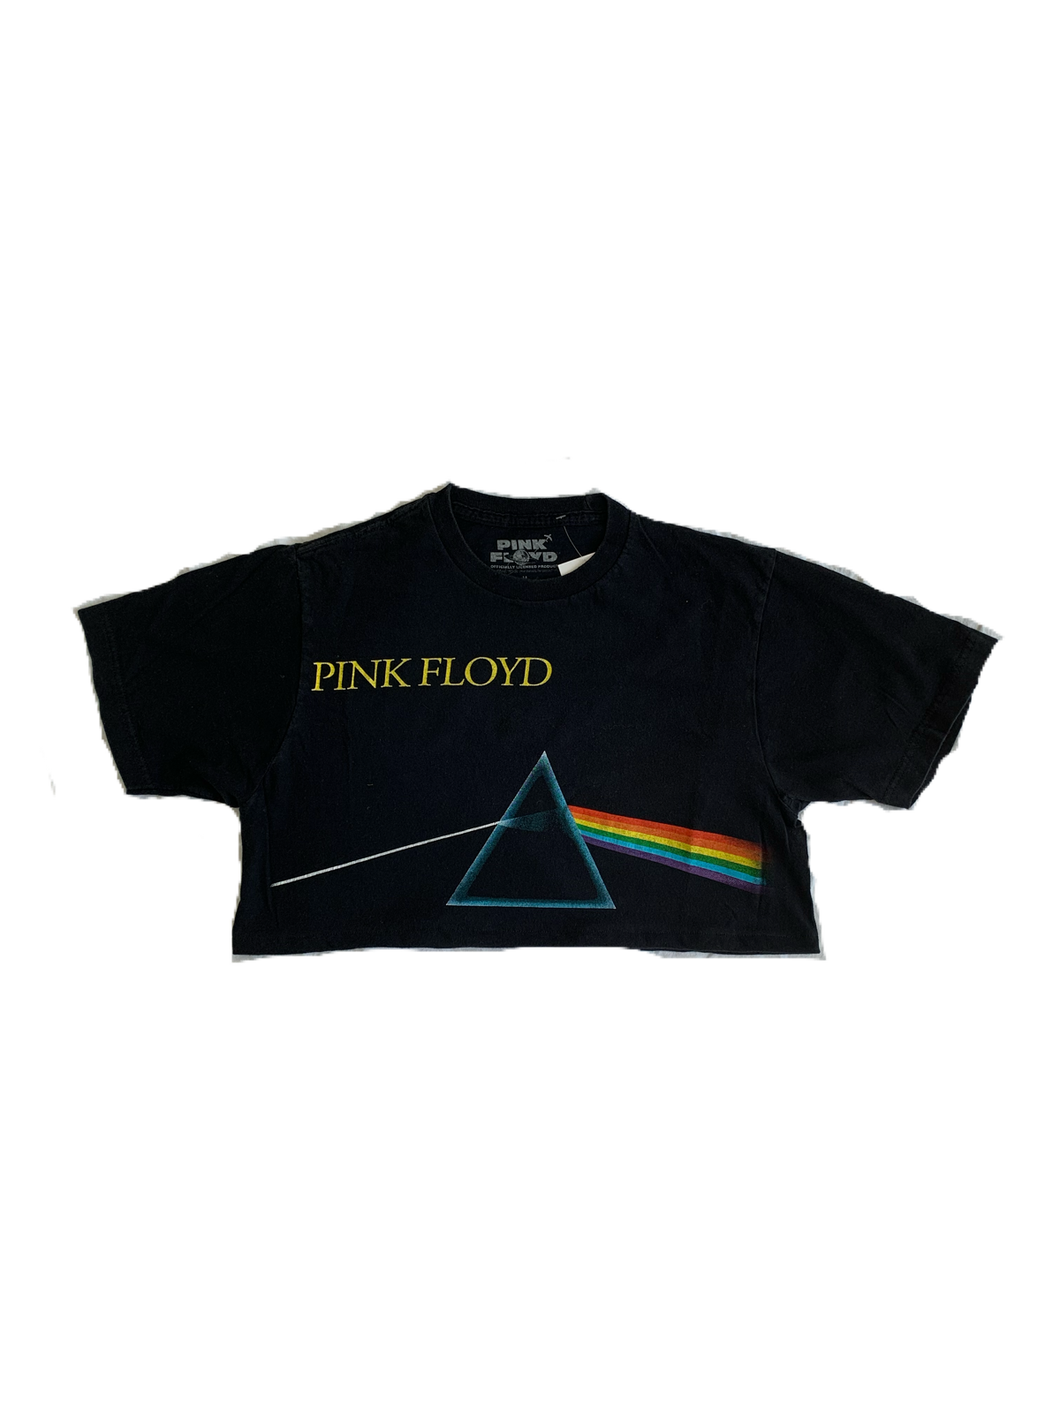 Pink Floyd Band Tee